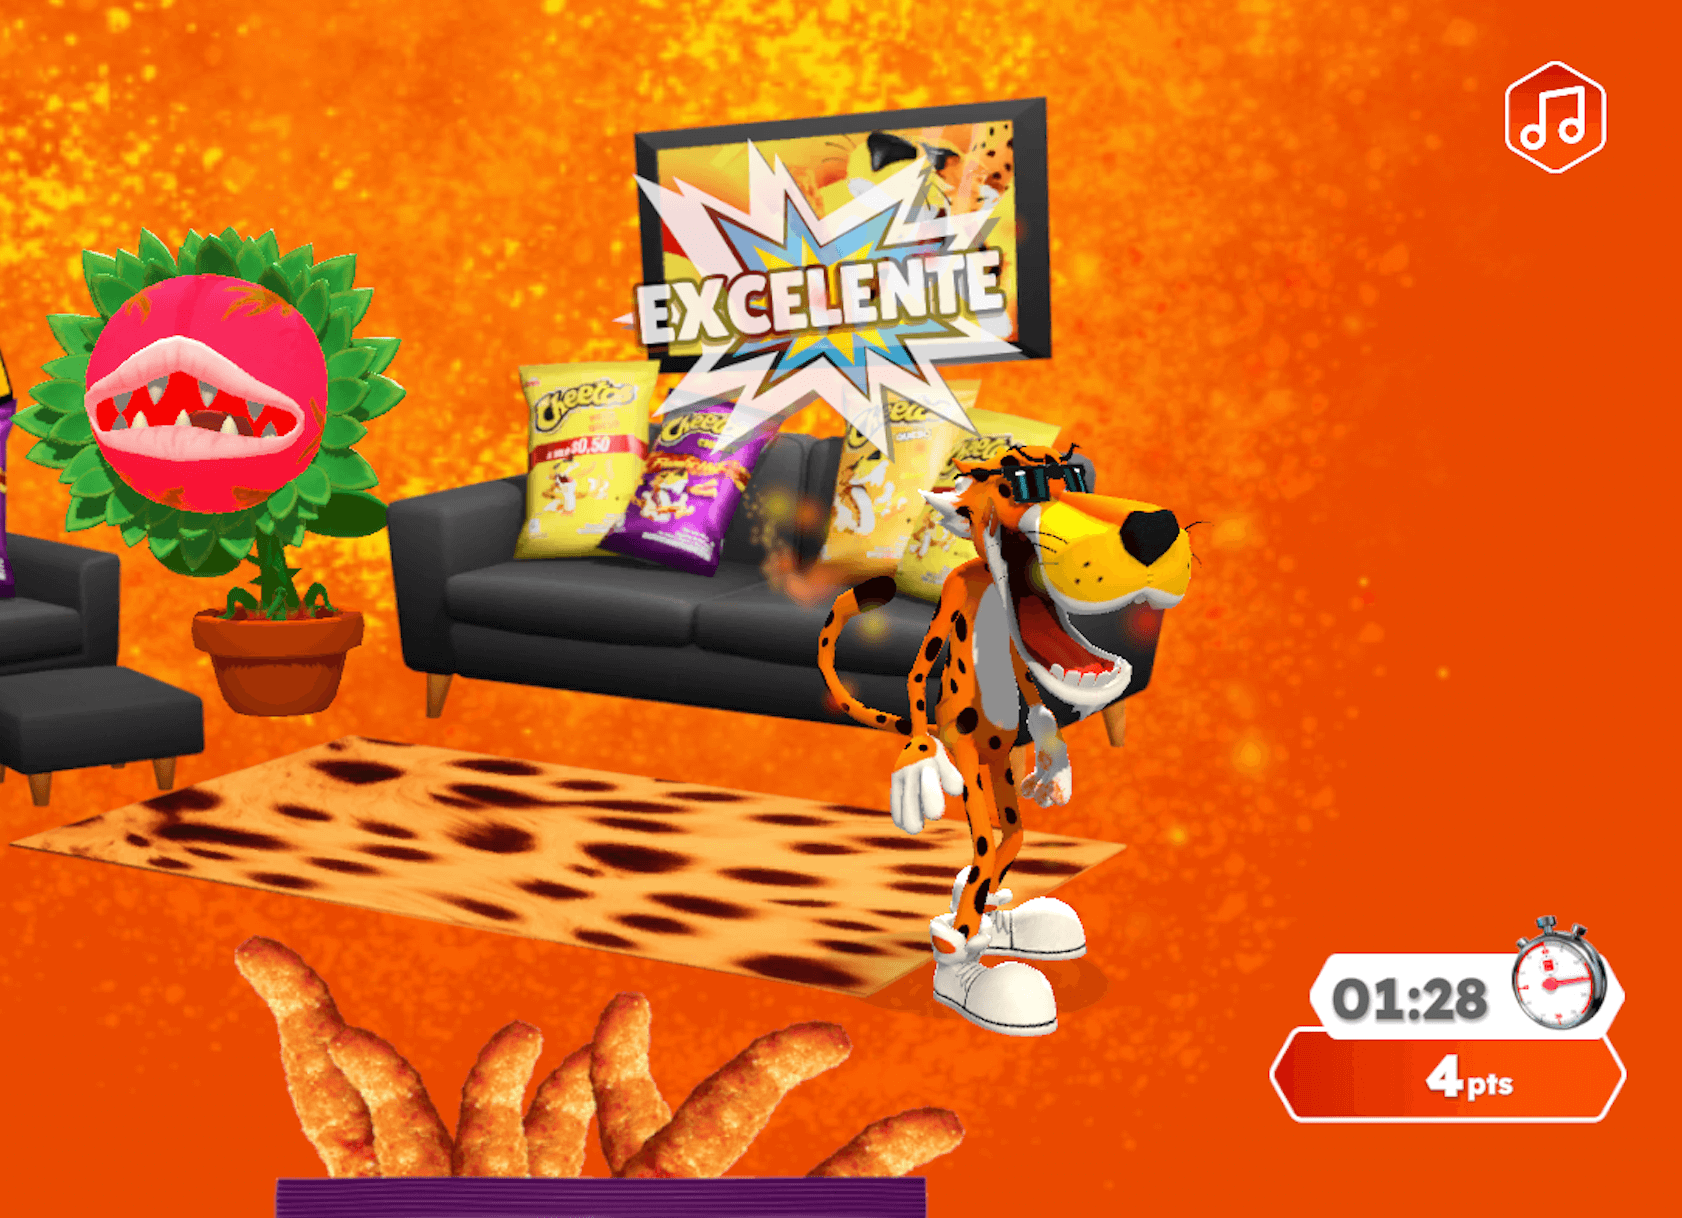 Es cosa de Cheetos: A Flavorful Fiesta of Fun and Games!